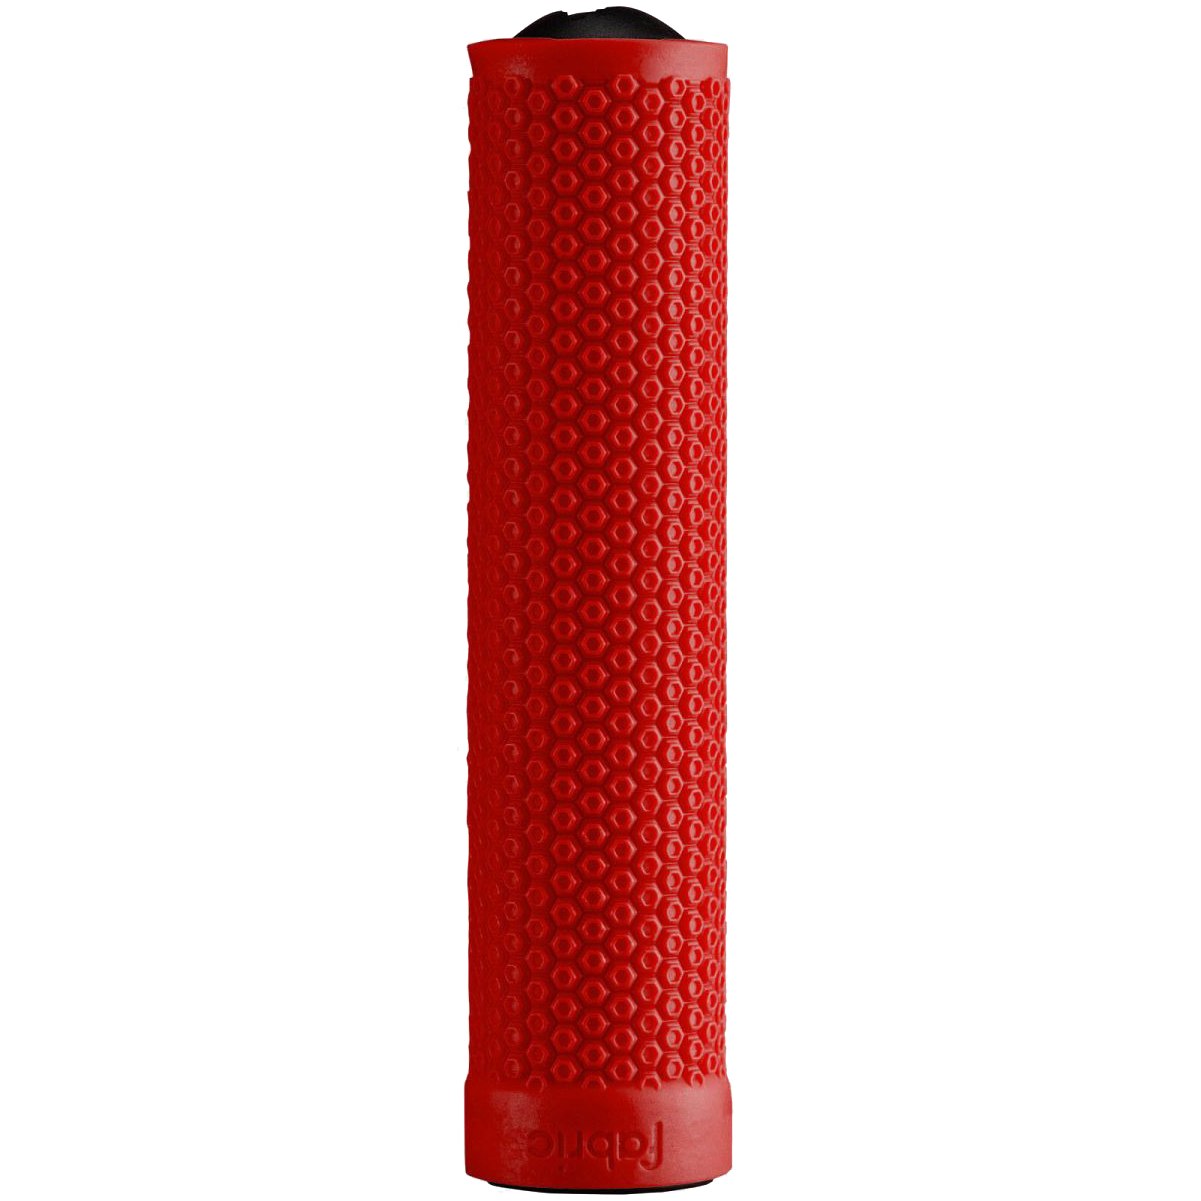 Productfoto van Fabric AM Handlebar Grips - red